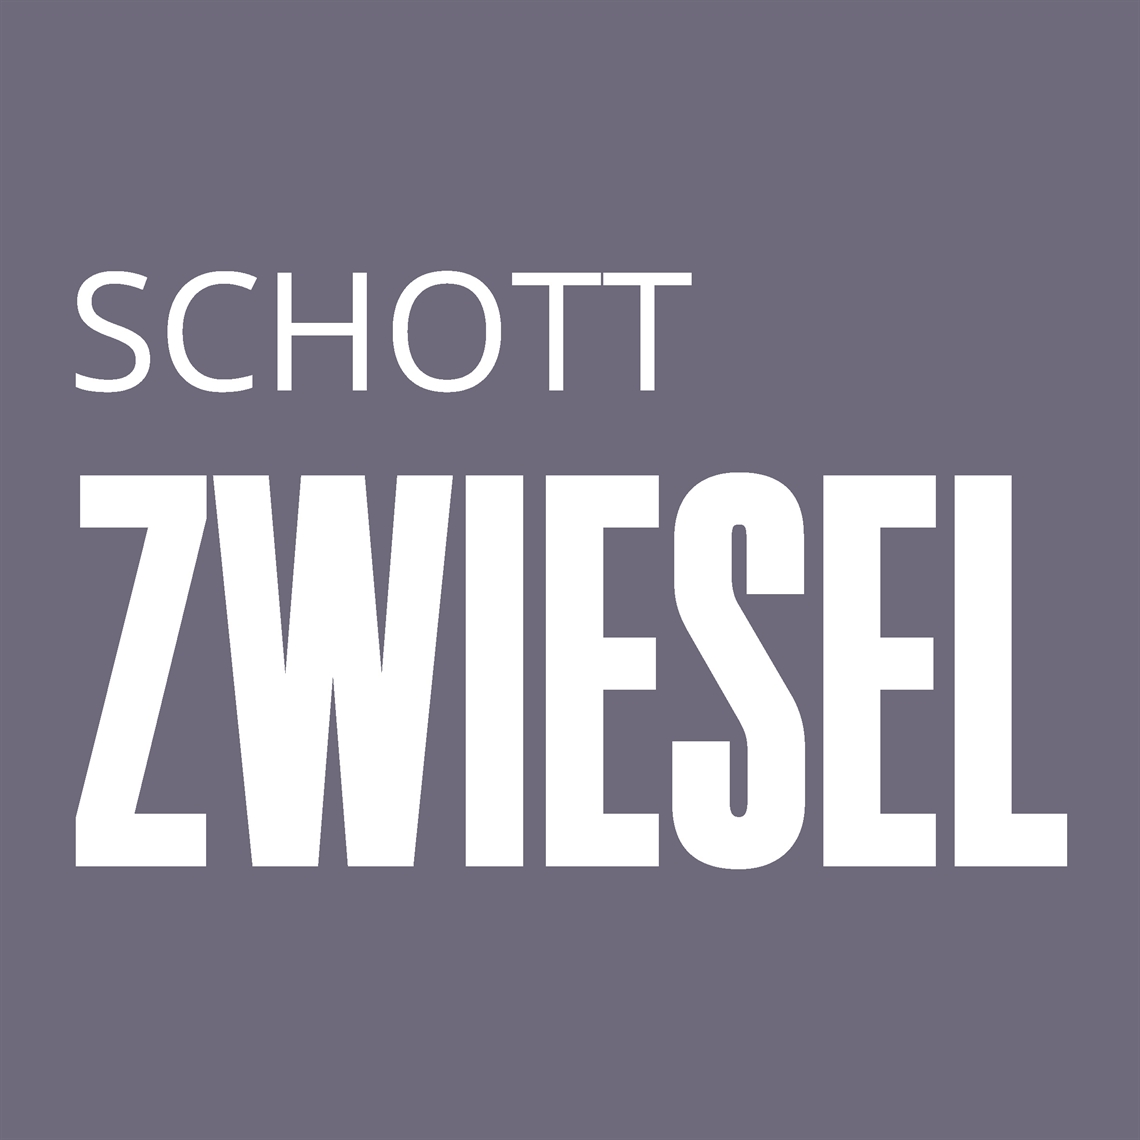 View our collection of Schott Zwiesel Leonardo